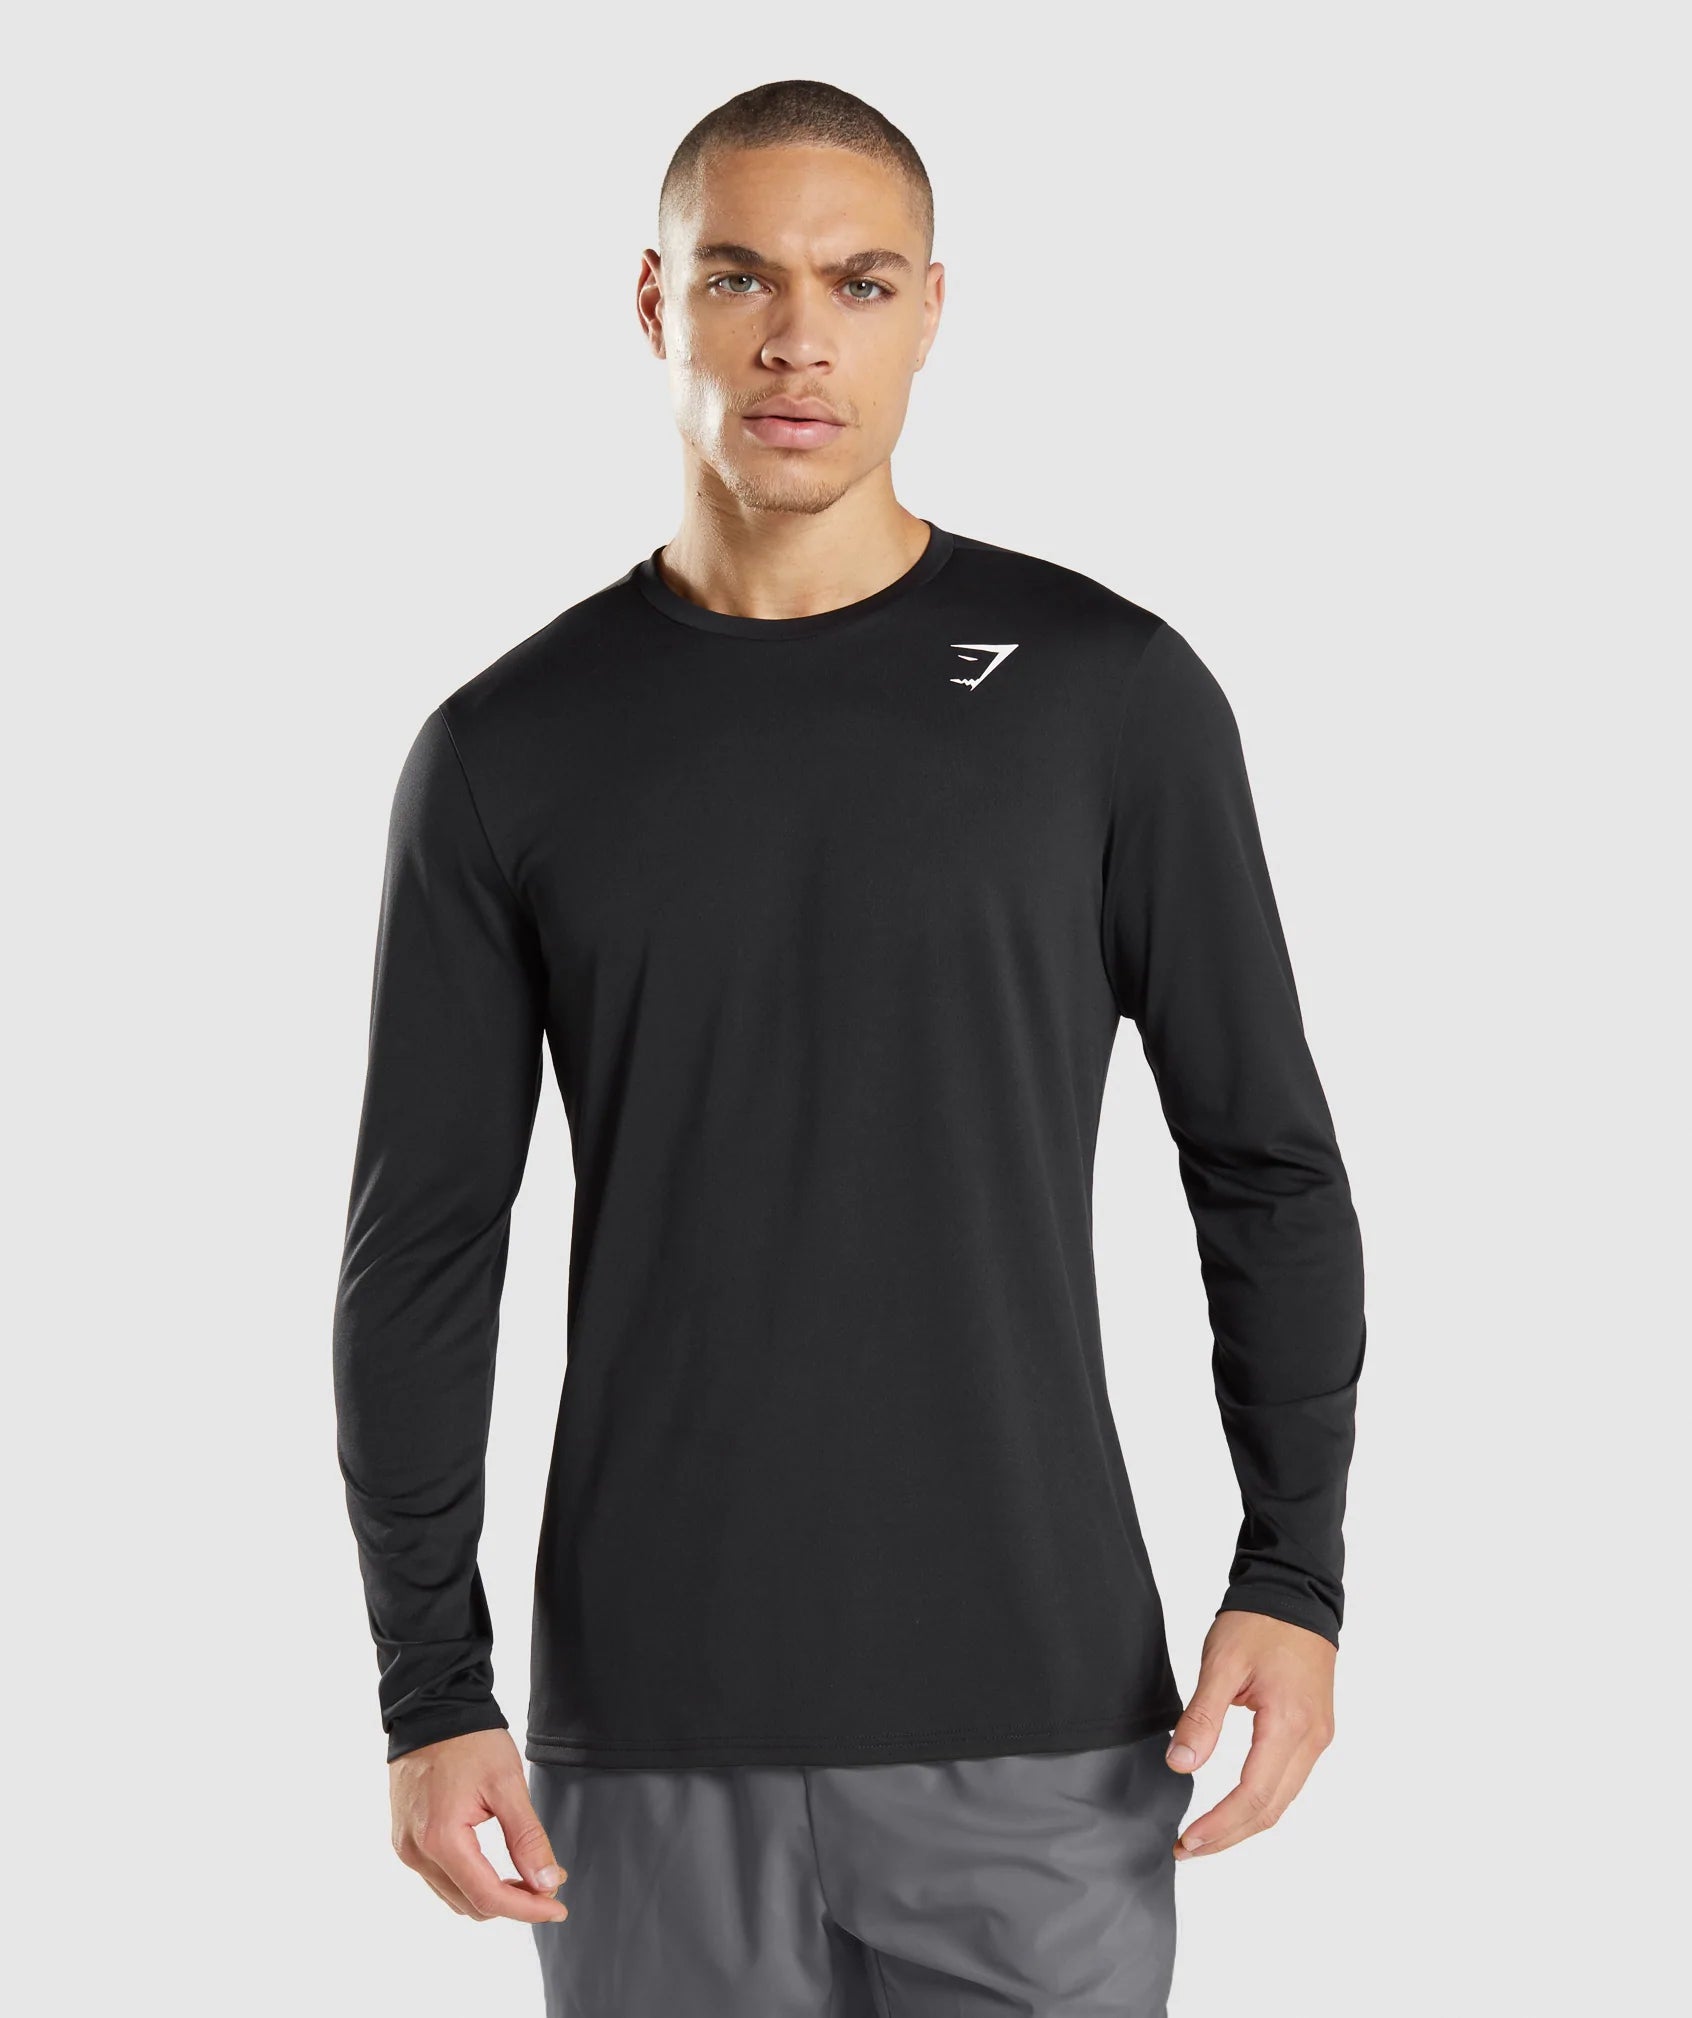 Gymshark Element Baselayer T-Shirt - Silhouette Grey